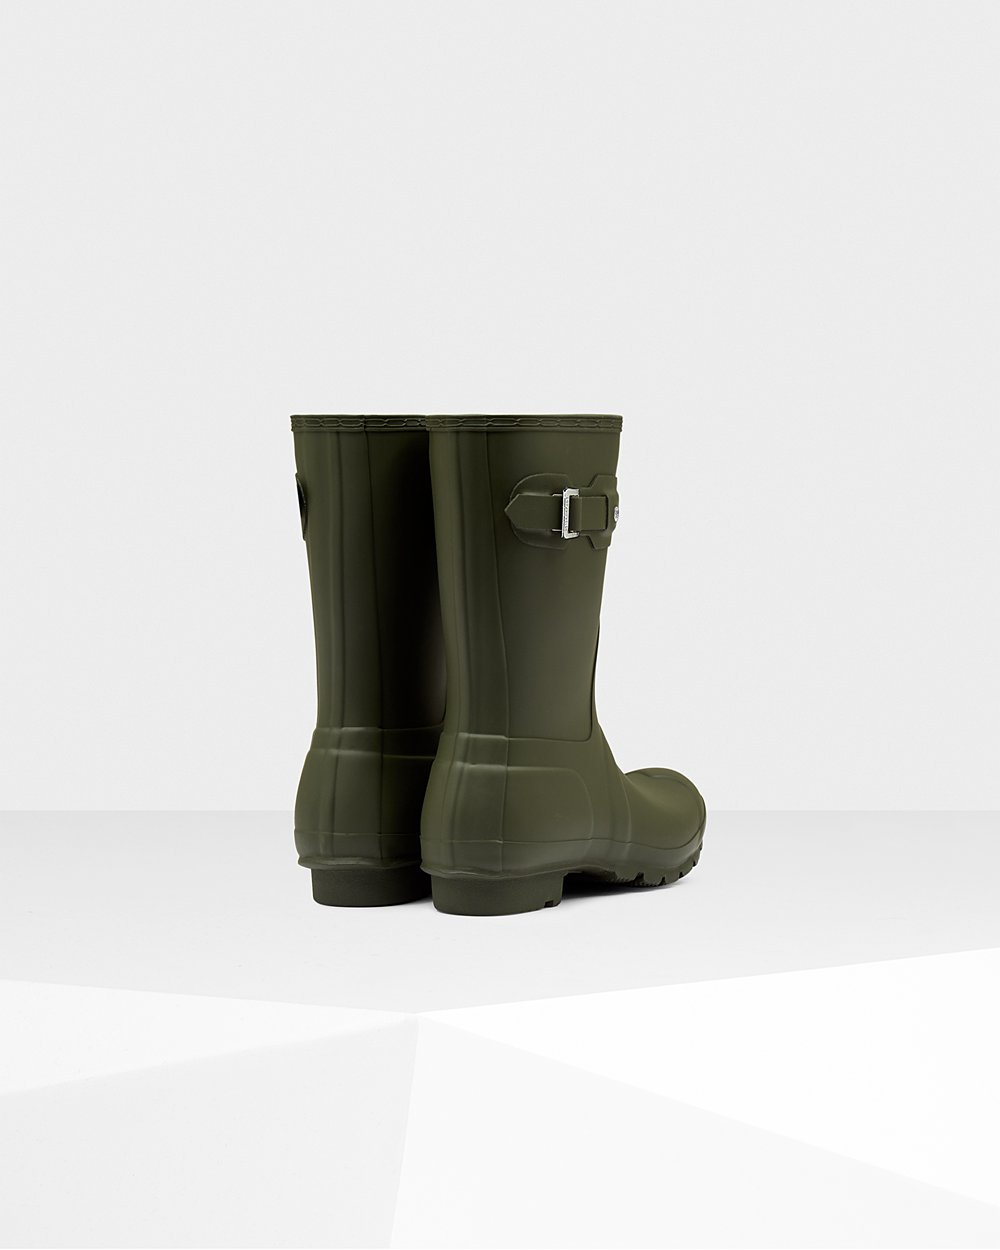 Womens Short Rain Boots - Hunter Original (27GXRBWIY) - Dark Olive